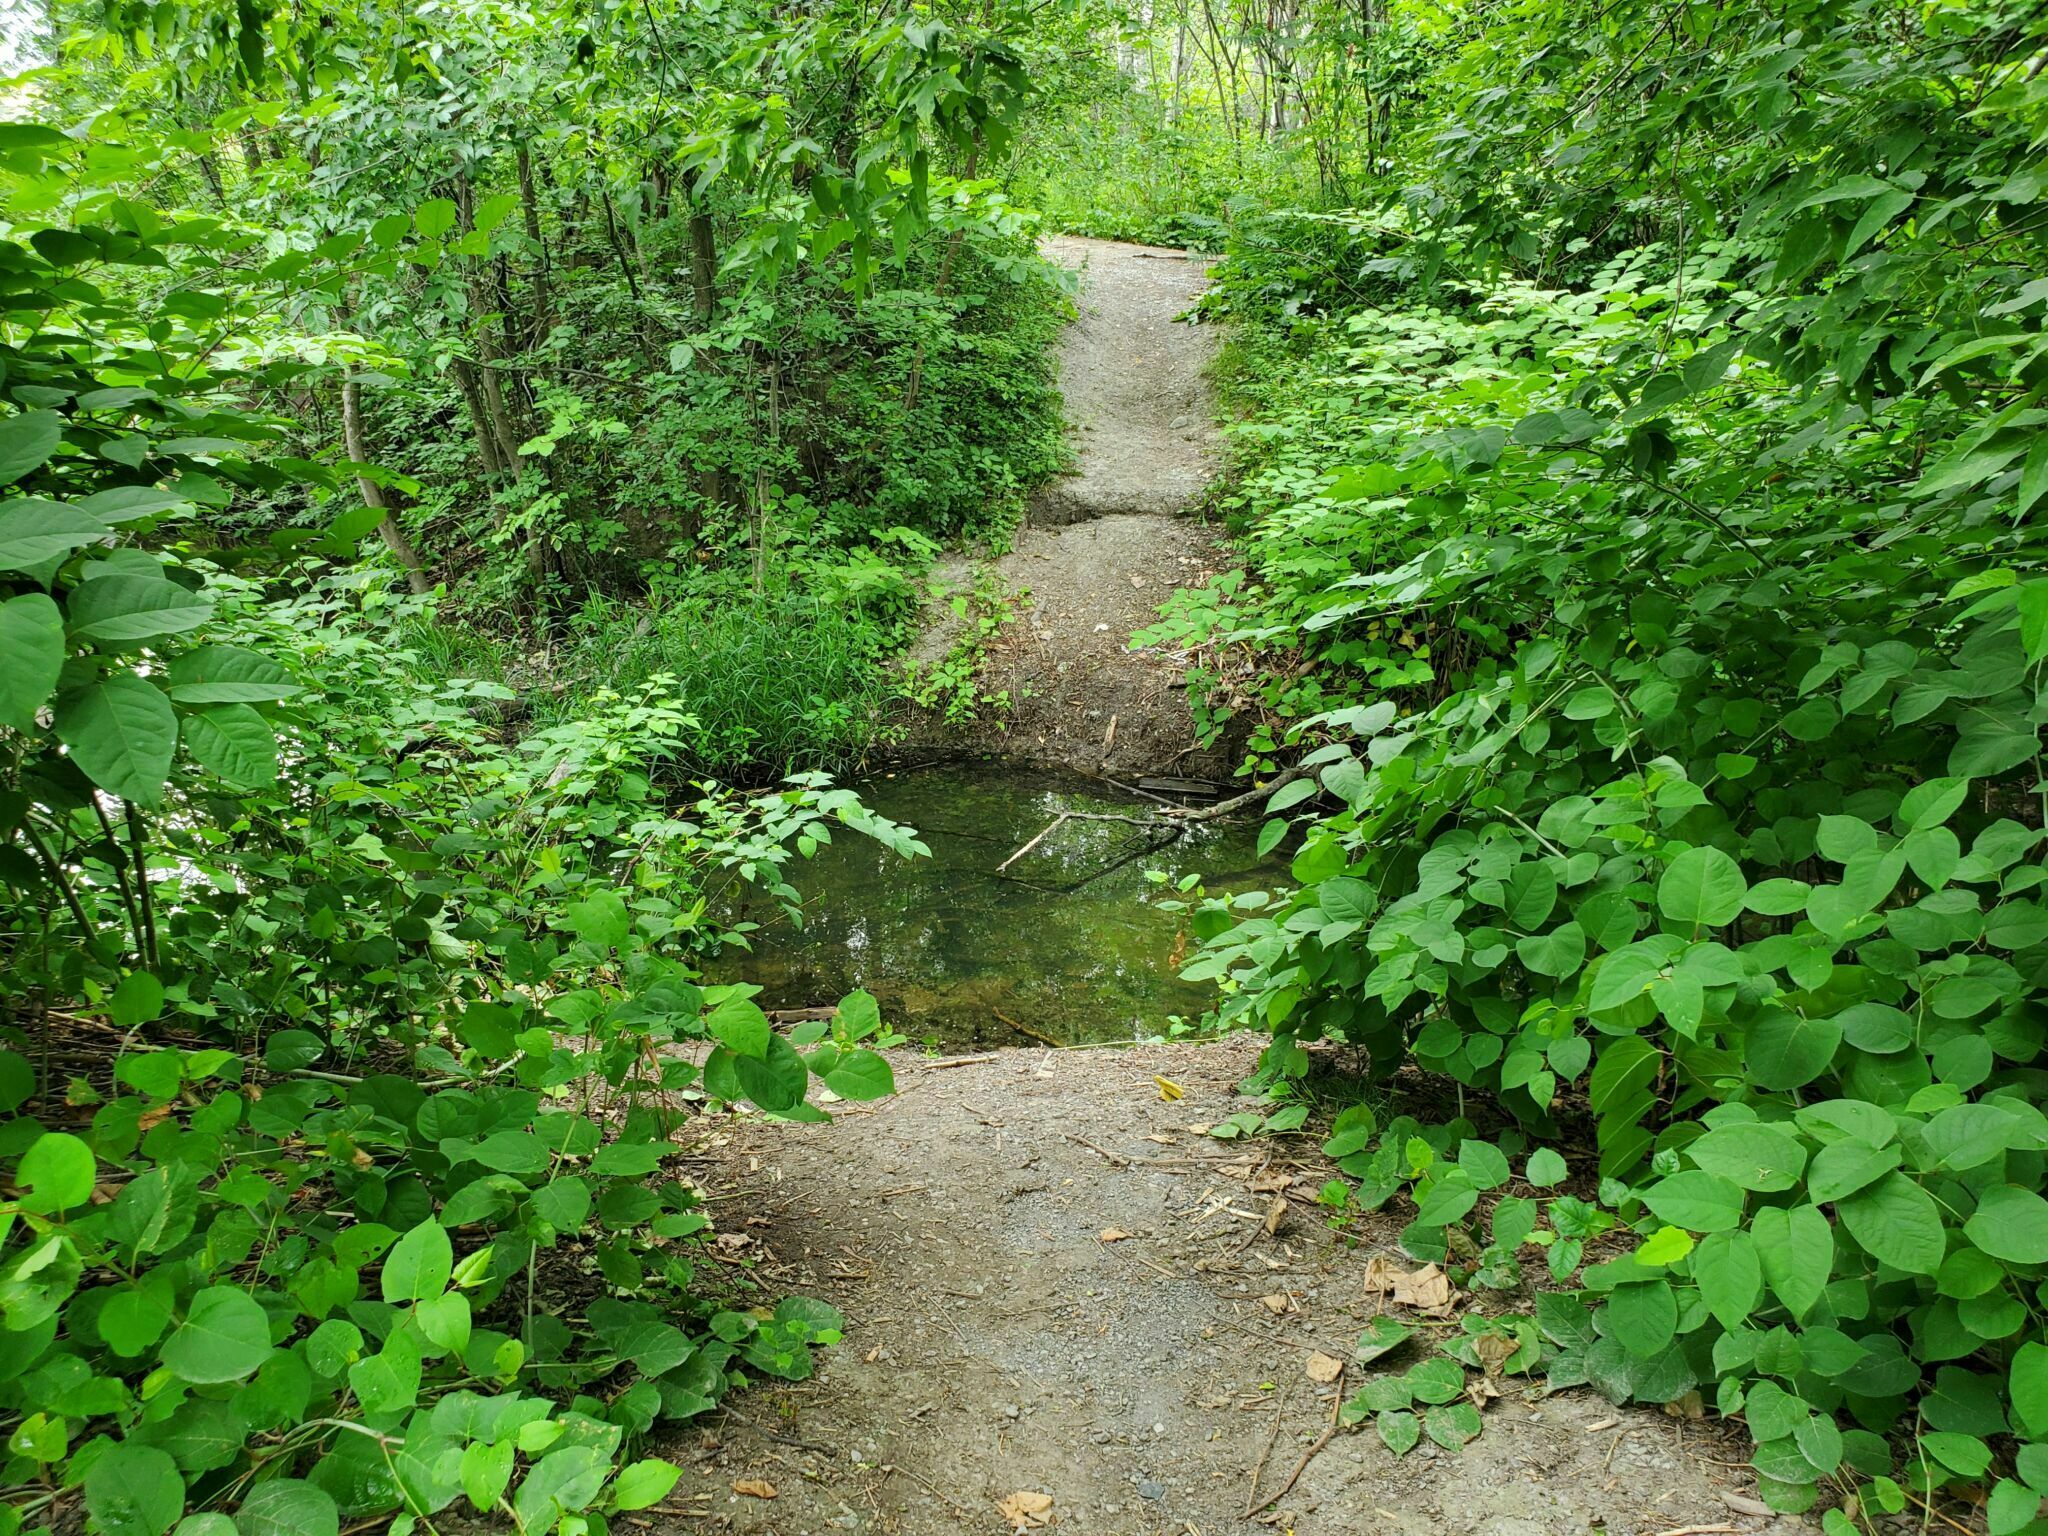 Small creek crossing a narrow path